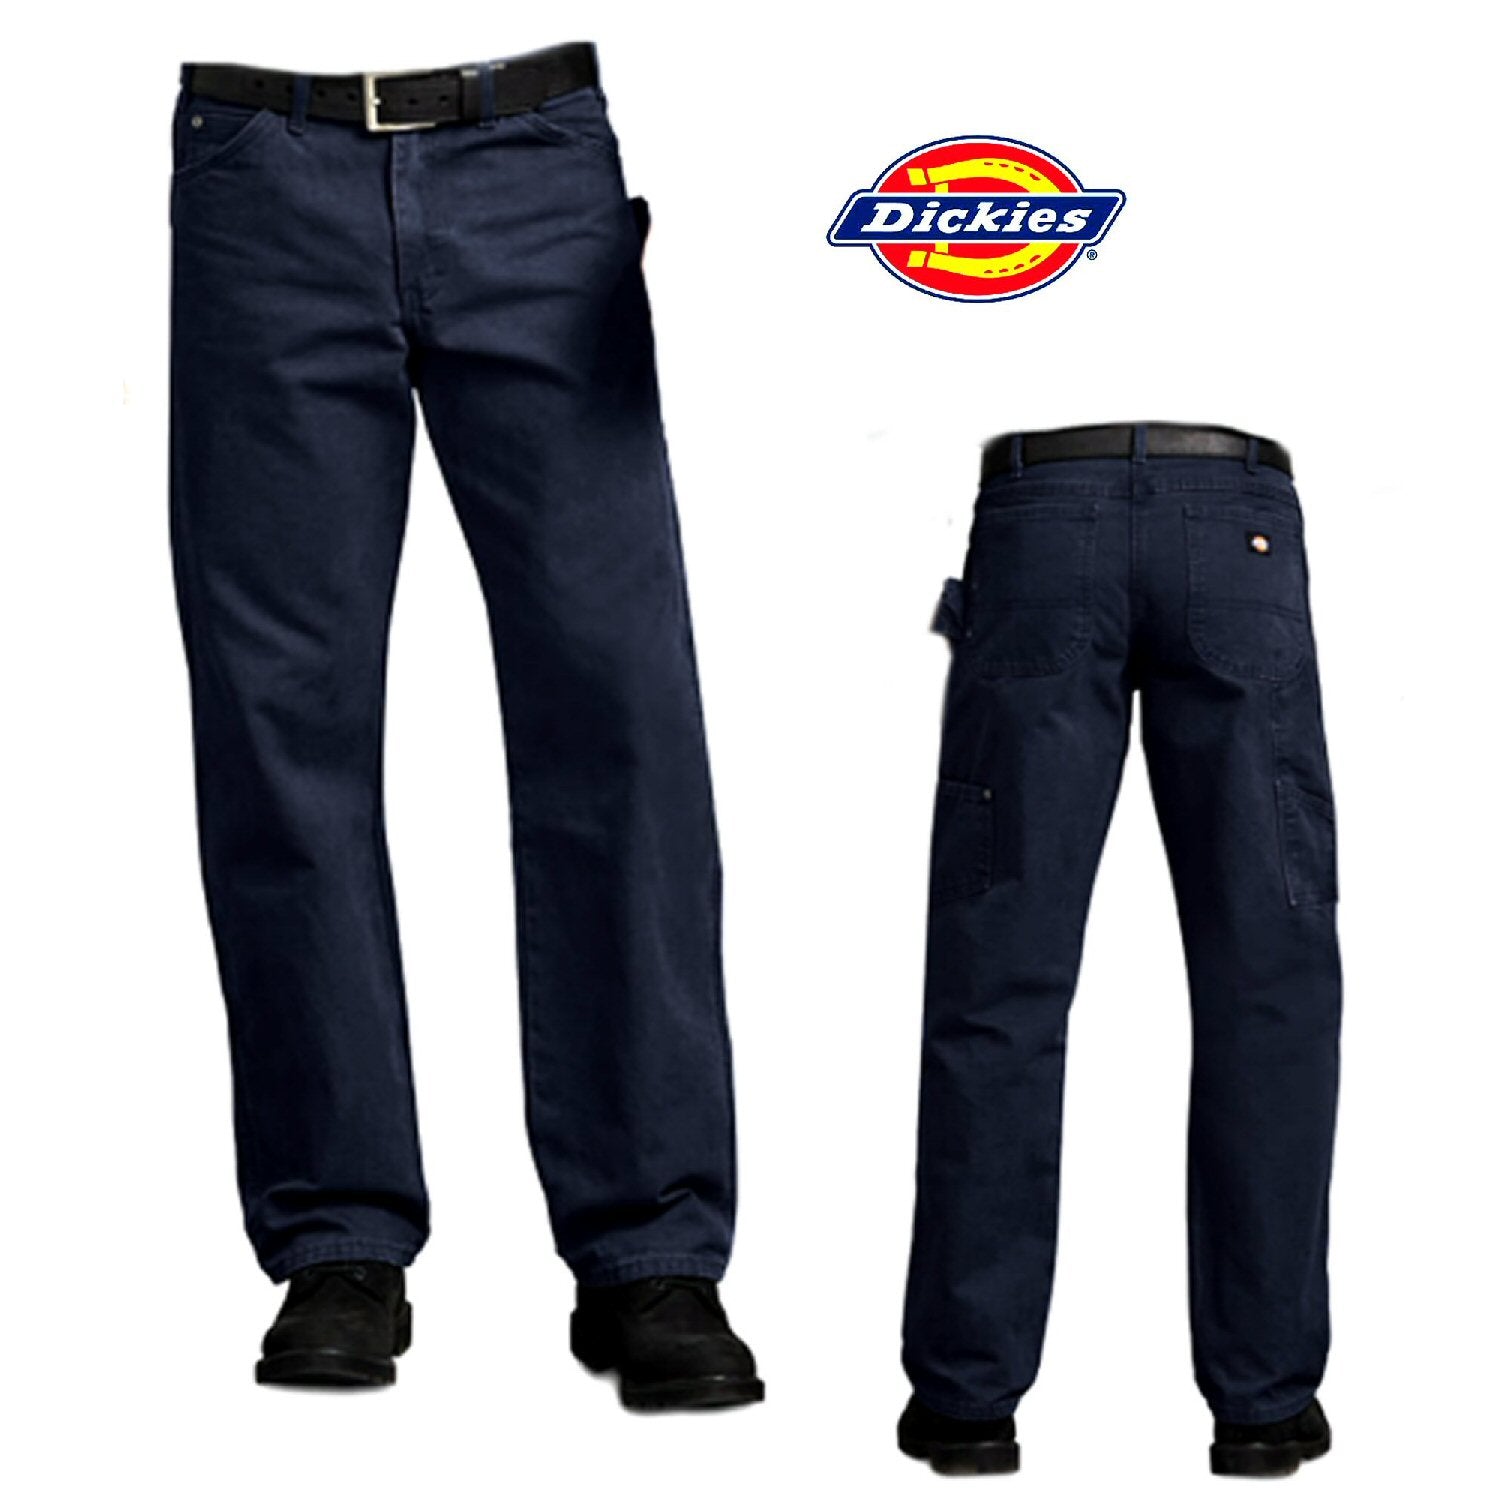 Dickies Men's Relaxed Fit Straight Leg Duck Jeans - Dark Navy Blue